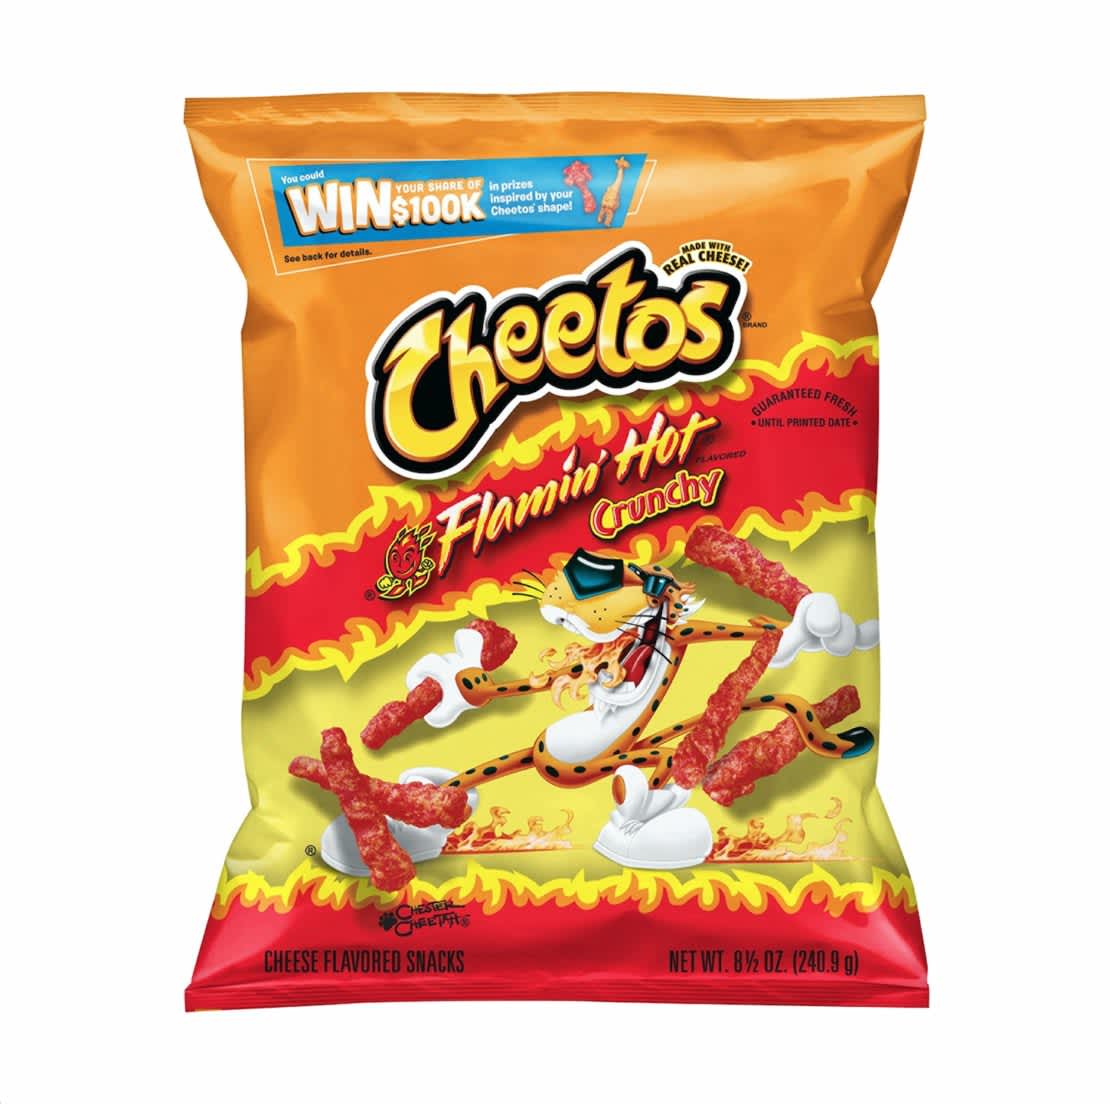 A Flamin' Hot Cheetos Bag